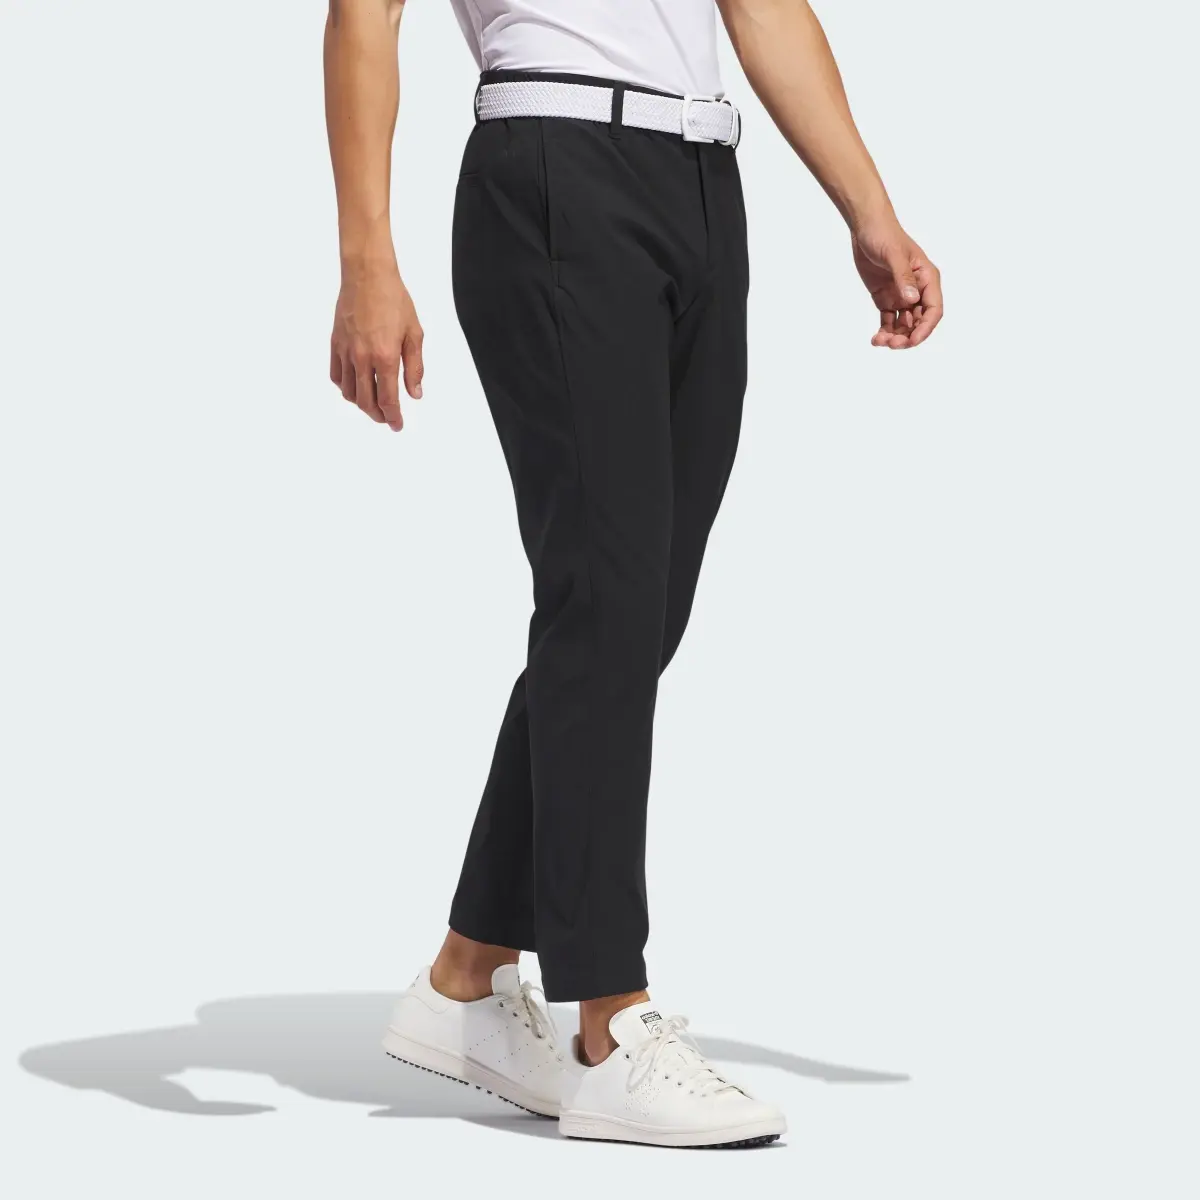 Adidas Ultimate365 Chino Pants. 3